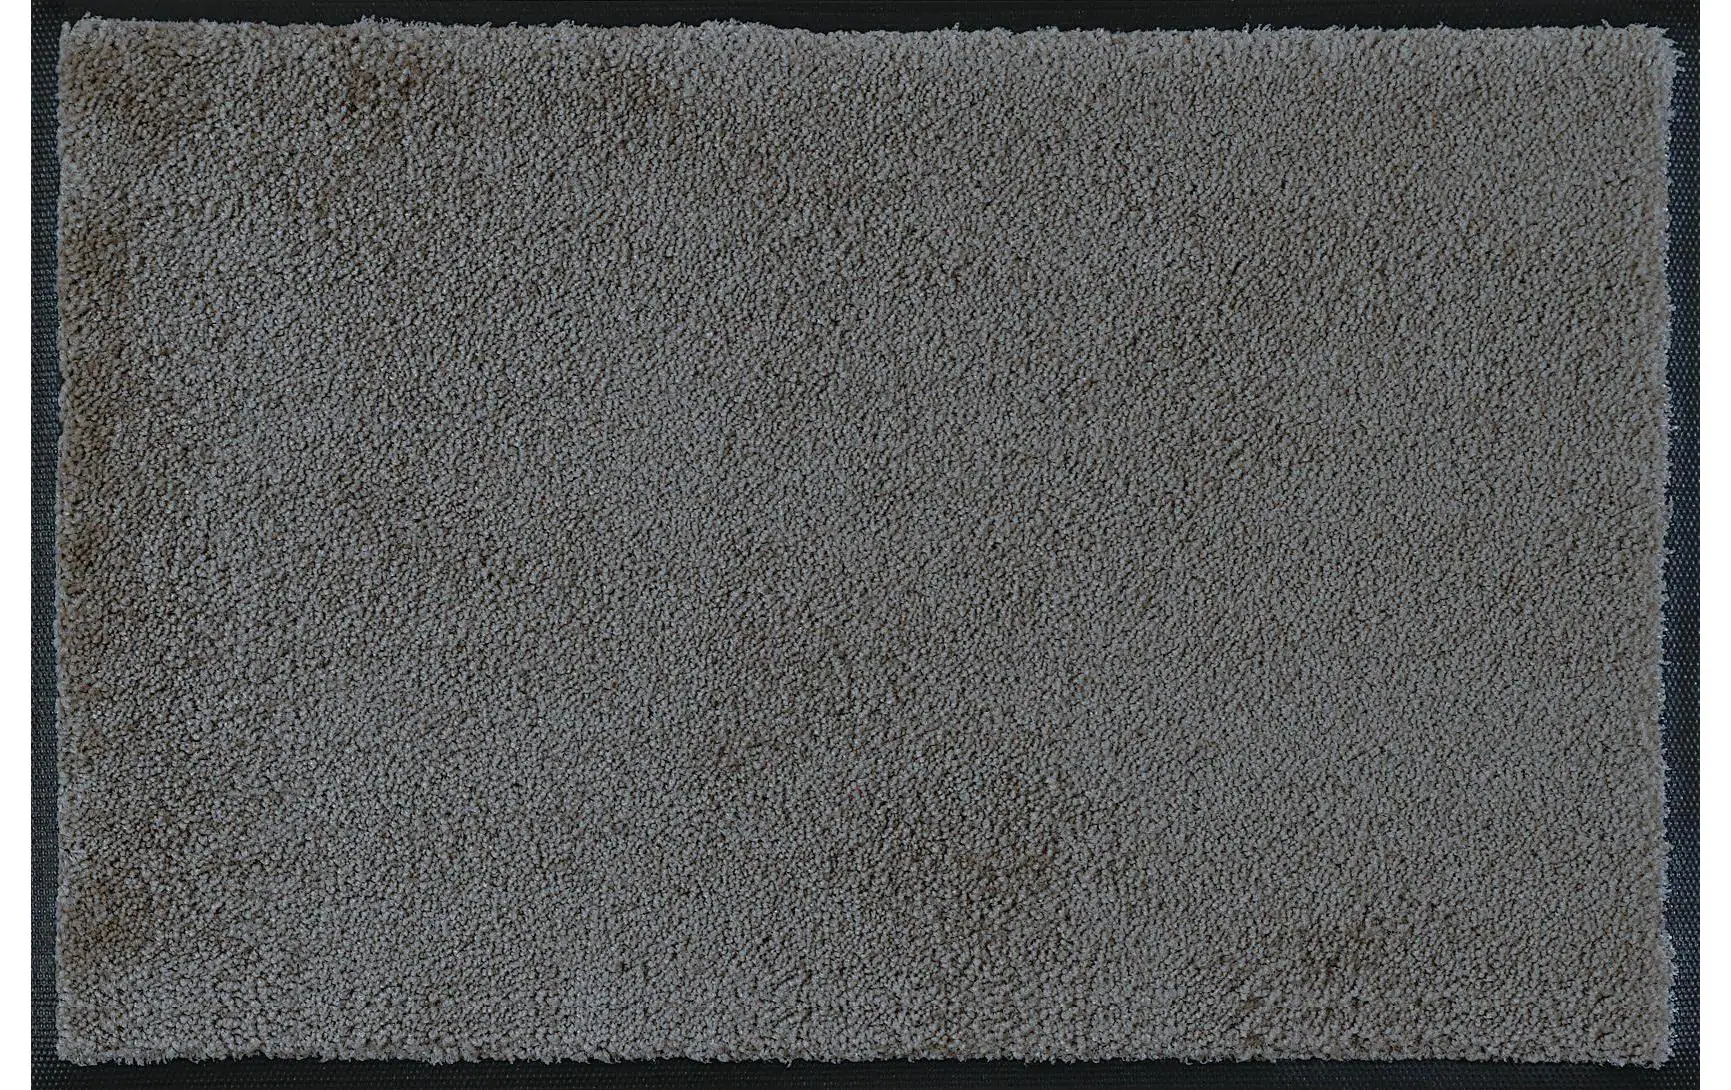 wash+dry Fussmatte Anthrazit, 75 x 120 cm, Breite: 75 cm, Länge: 120 cm, Motiv: -, Material: Polyamid, Nitril, Farbe: Anthrazit